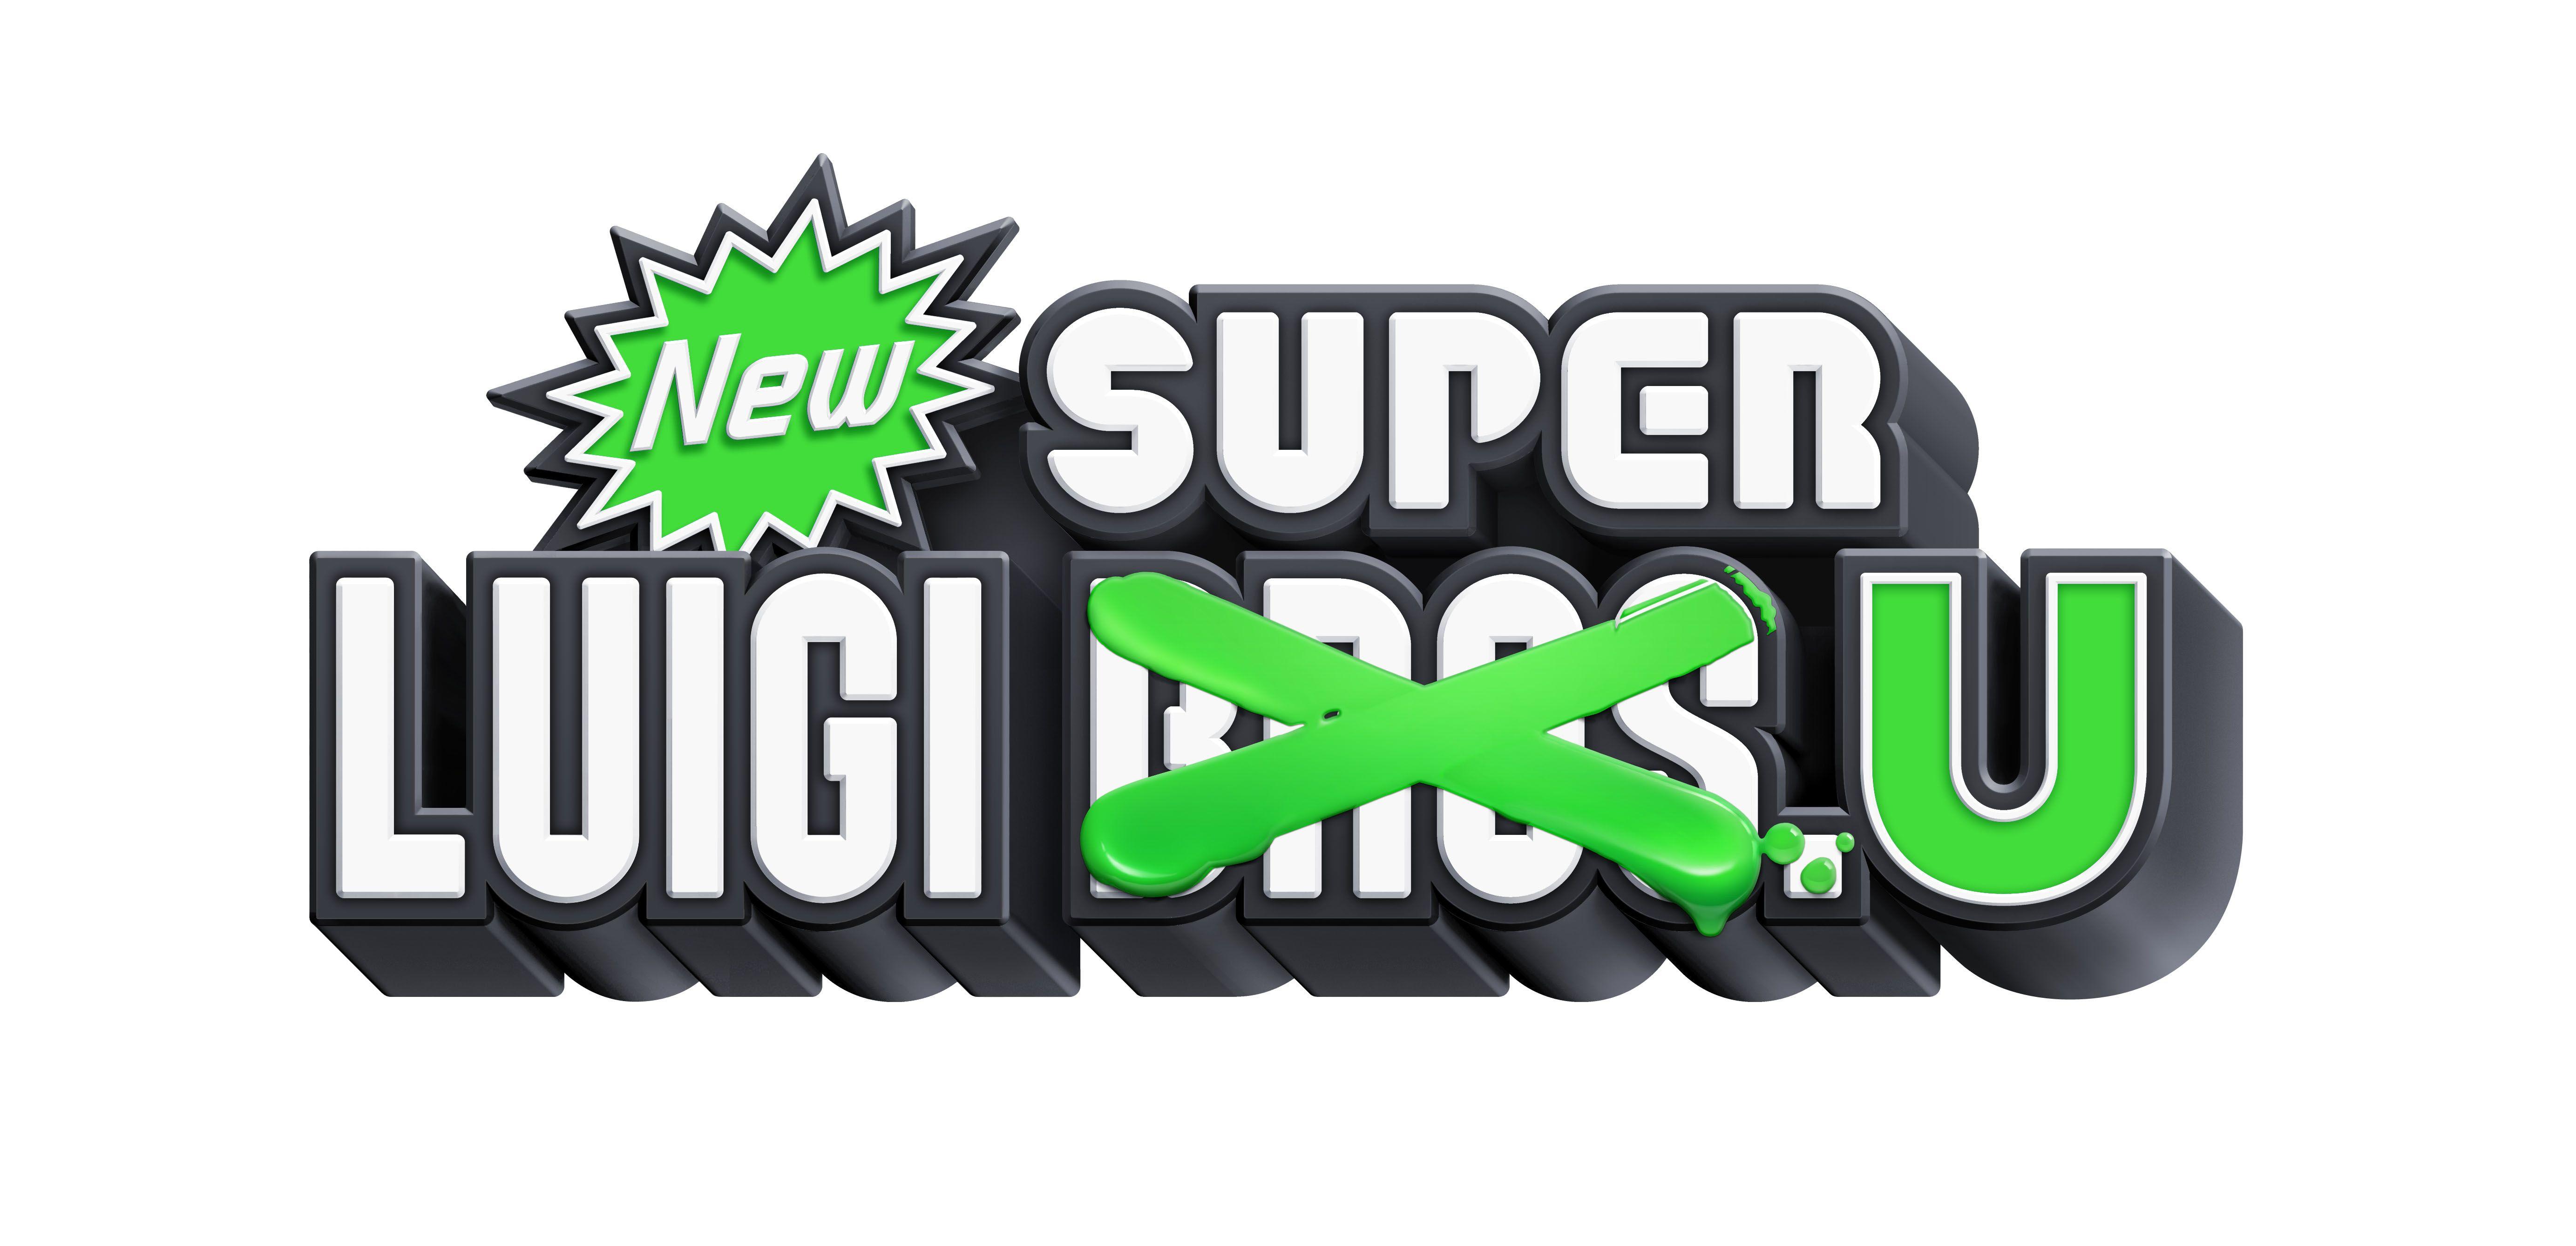 Link U Logo - New Super Luigi Wii U logo (2)